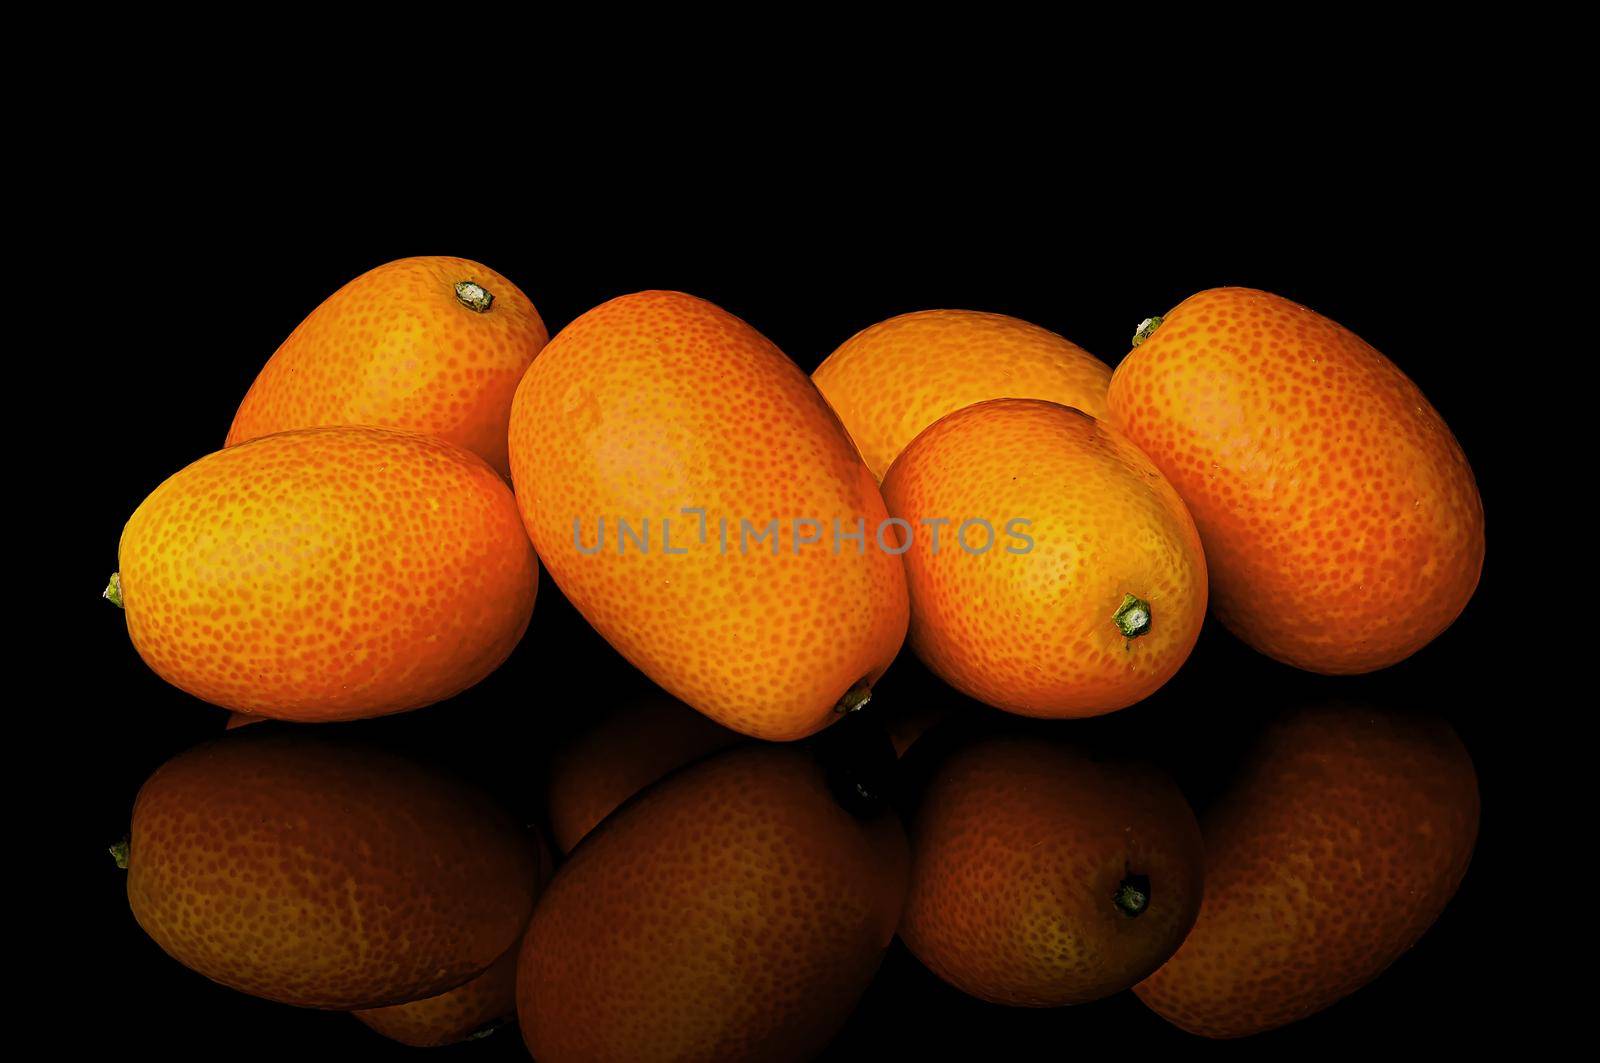 Heap of ripe kumquats on black background by Cipariss